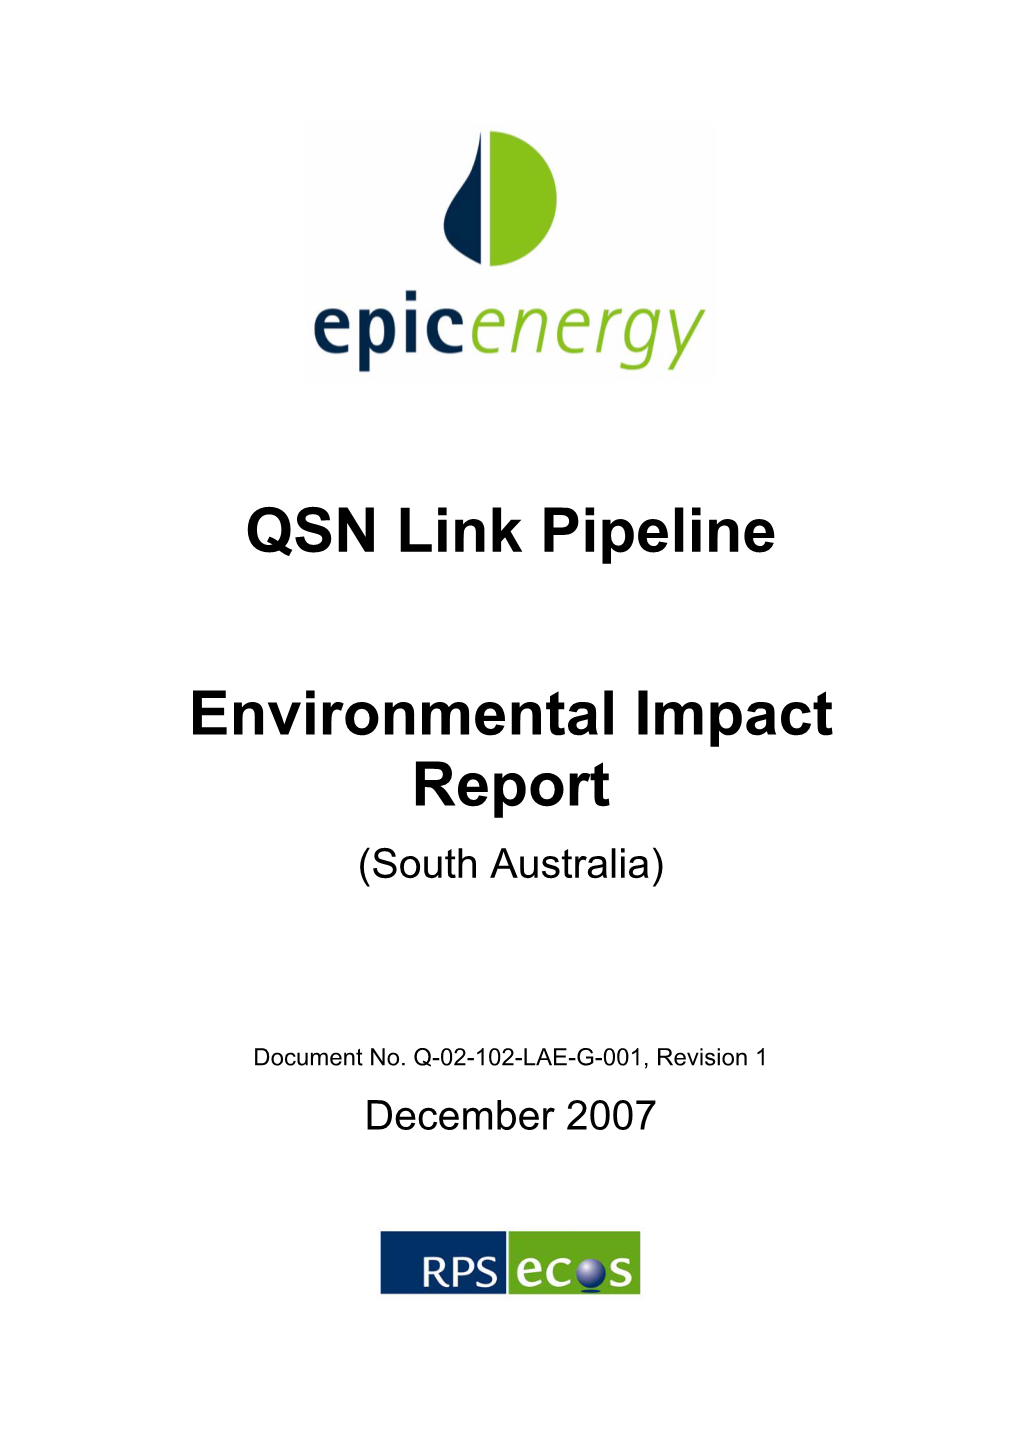 QSN Link Pipeline Environmental Impact Report